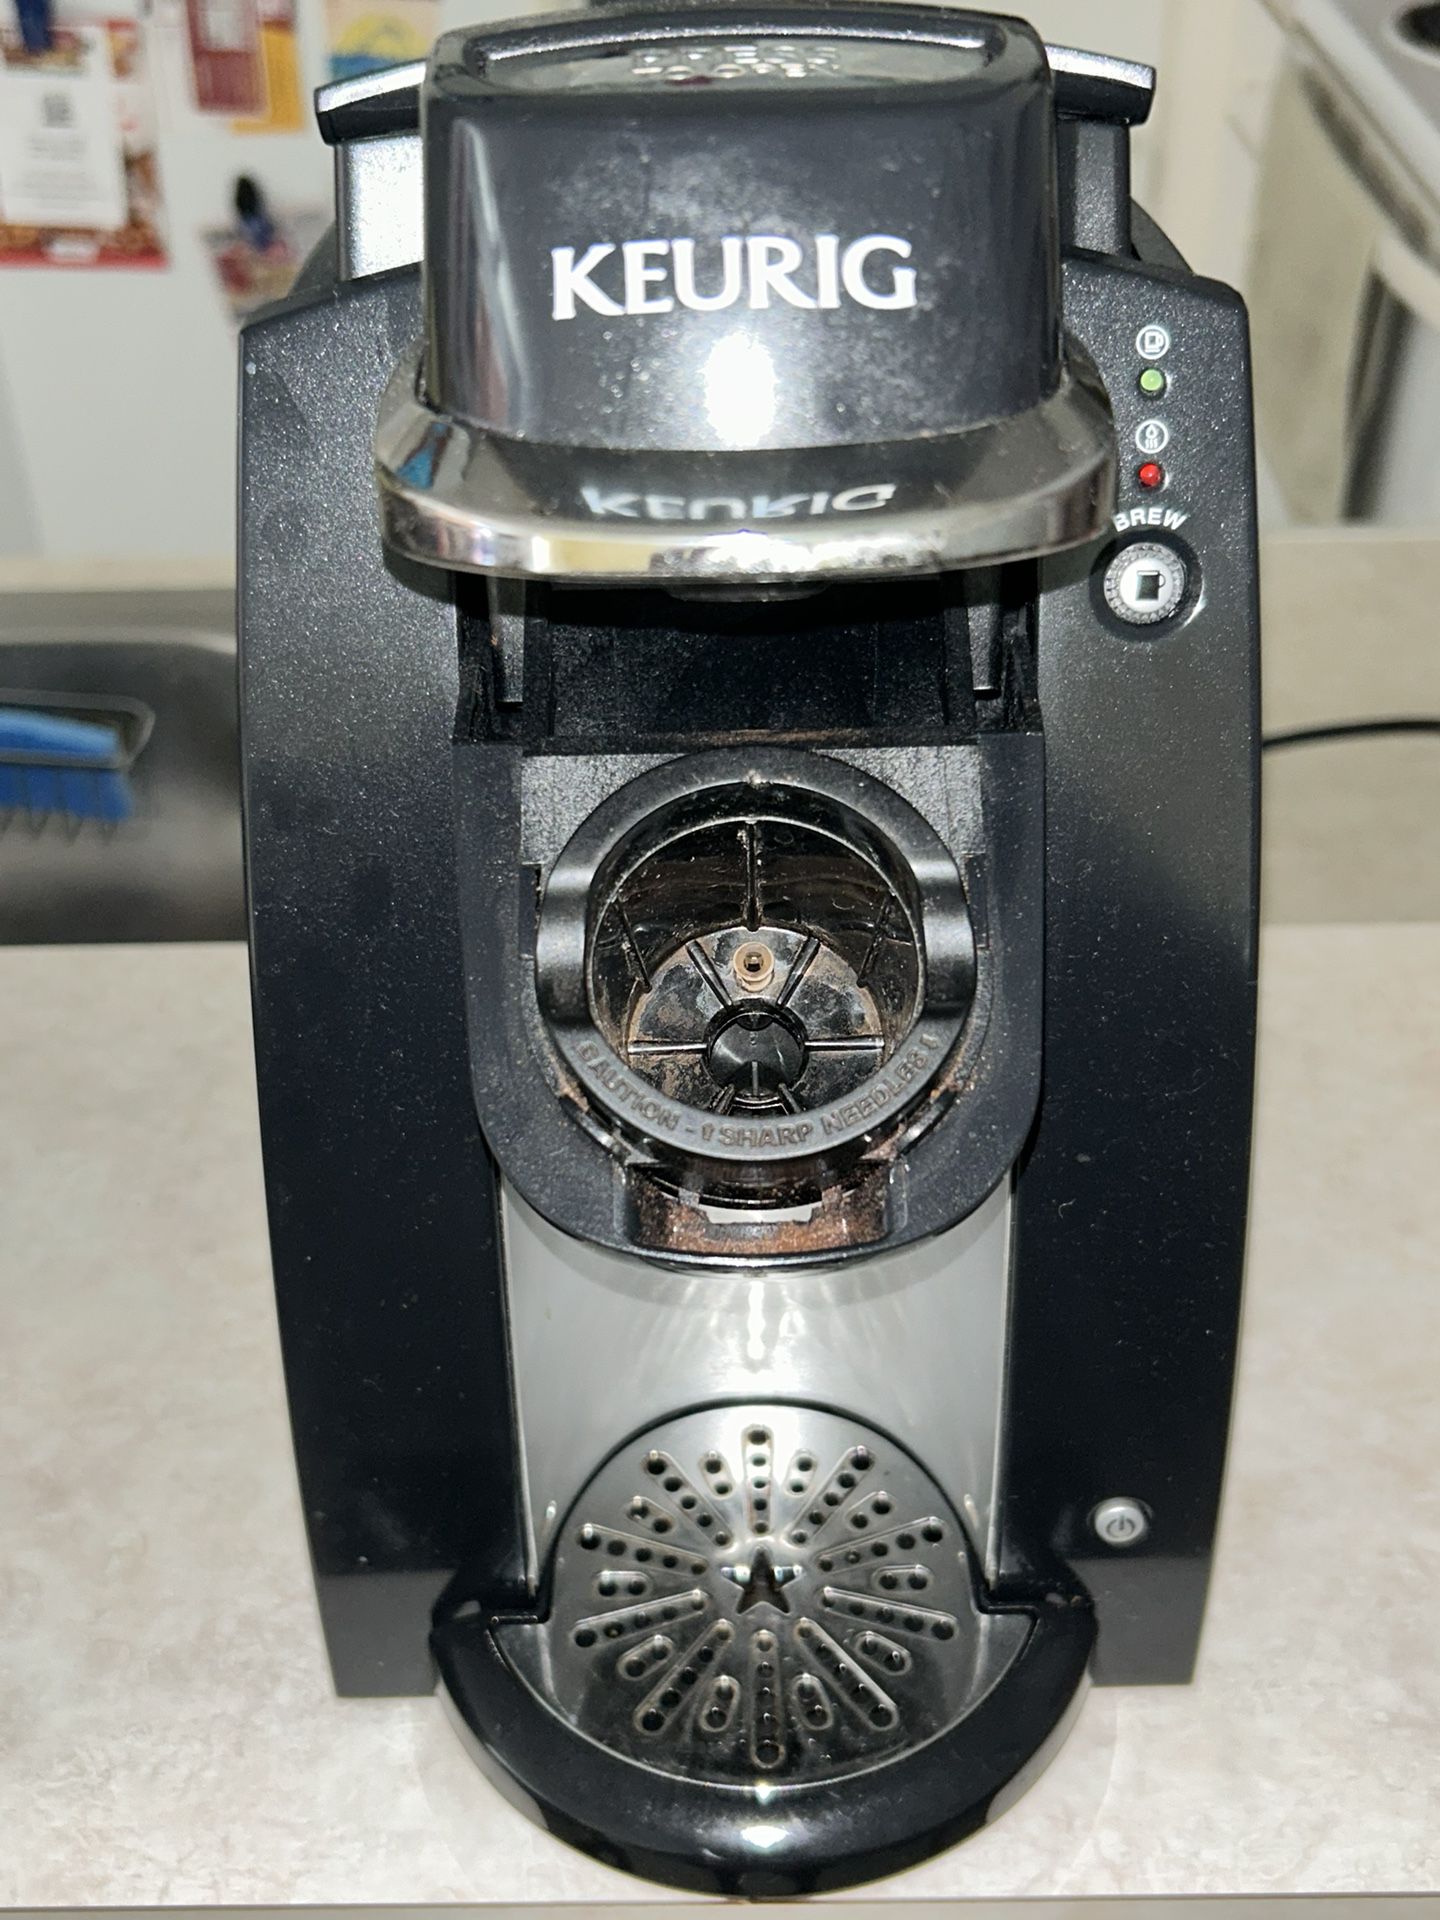 Keurig Premium Coffee Espresso System Maker Single Cup Serving Model B30 